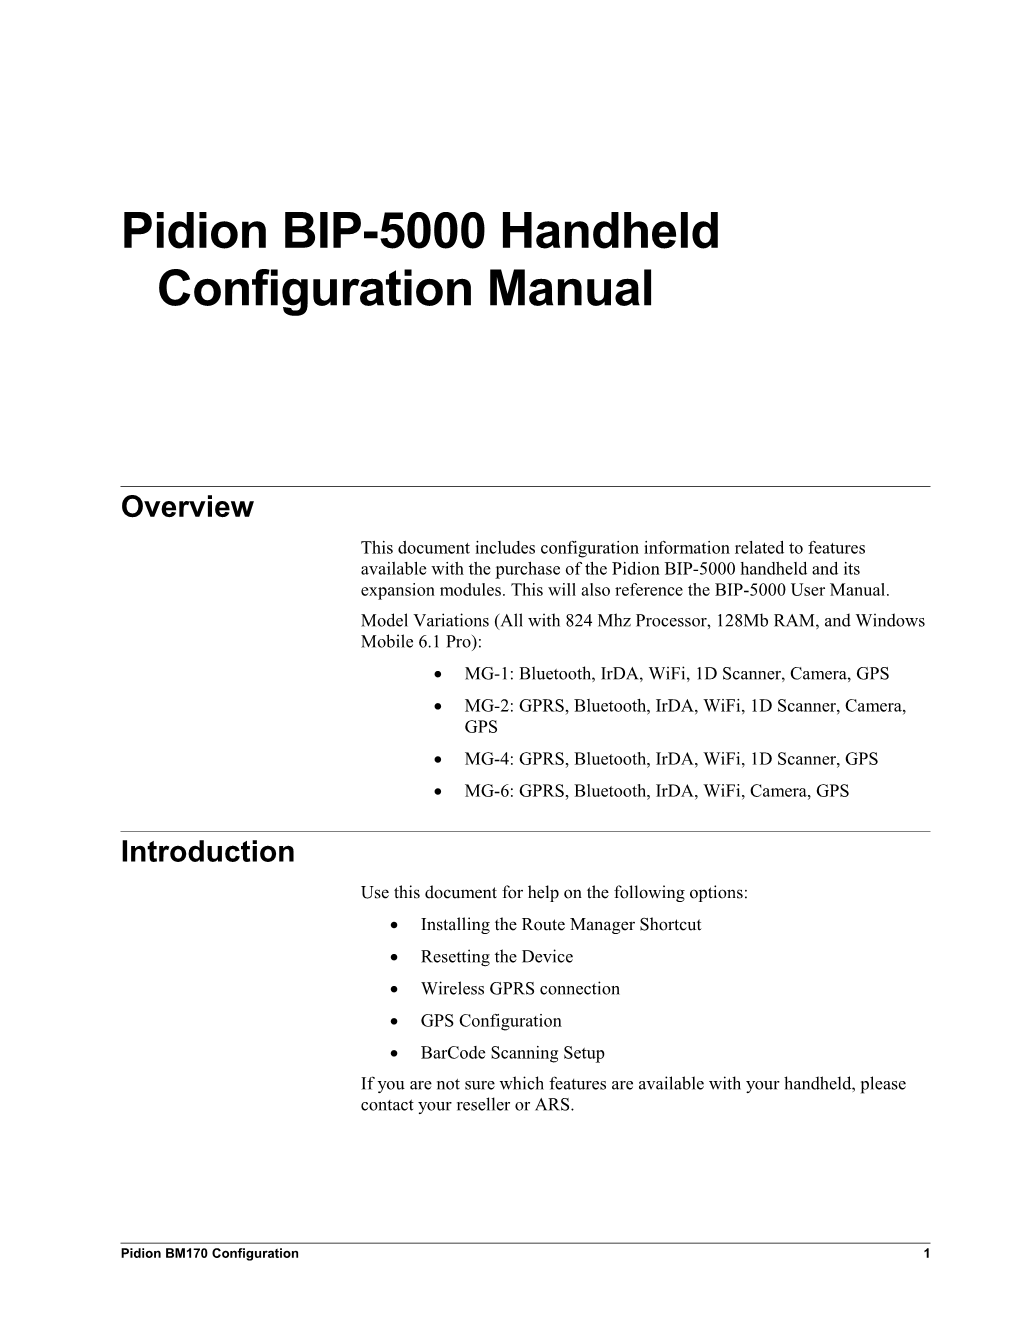 Rmadvanced Supplemental Manual